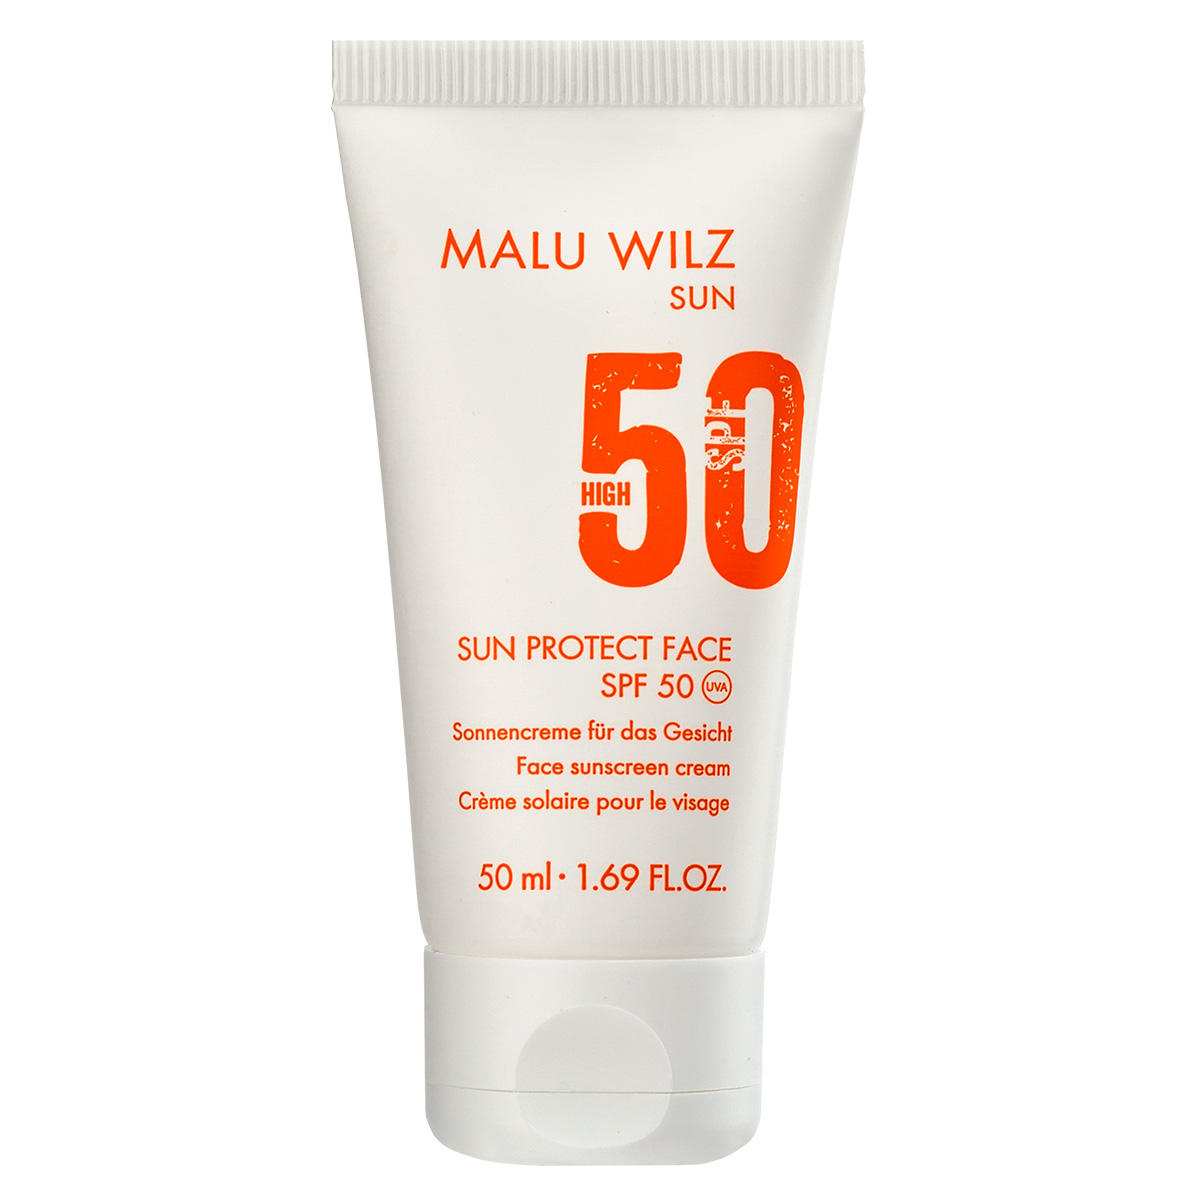 Malu Wilz Sun Sun Protect Face SPF 50 50 ml - 1